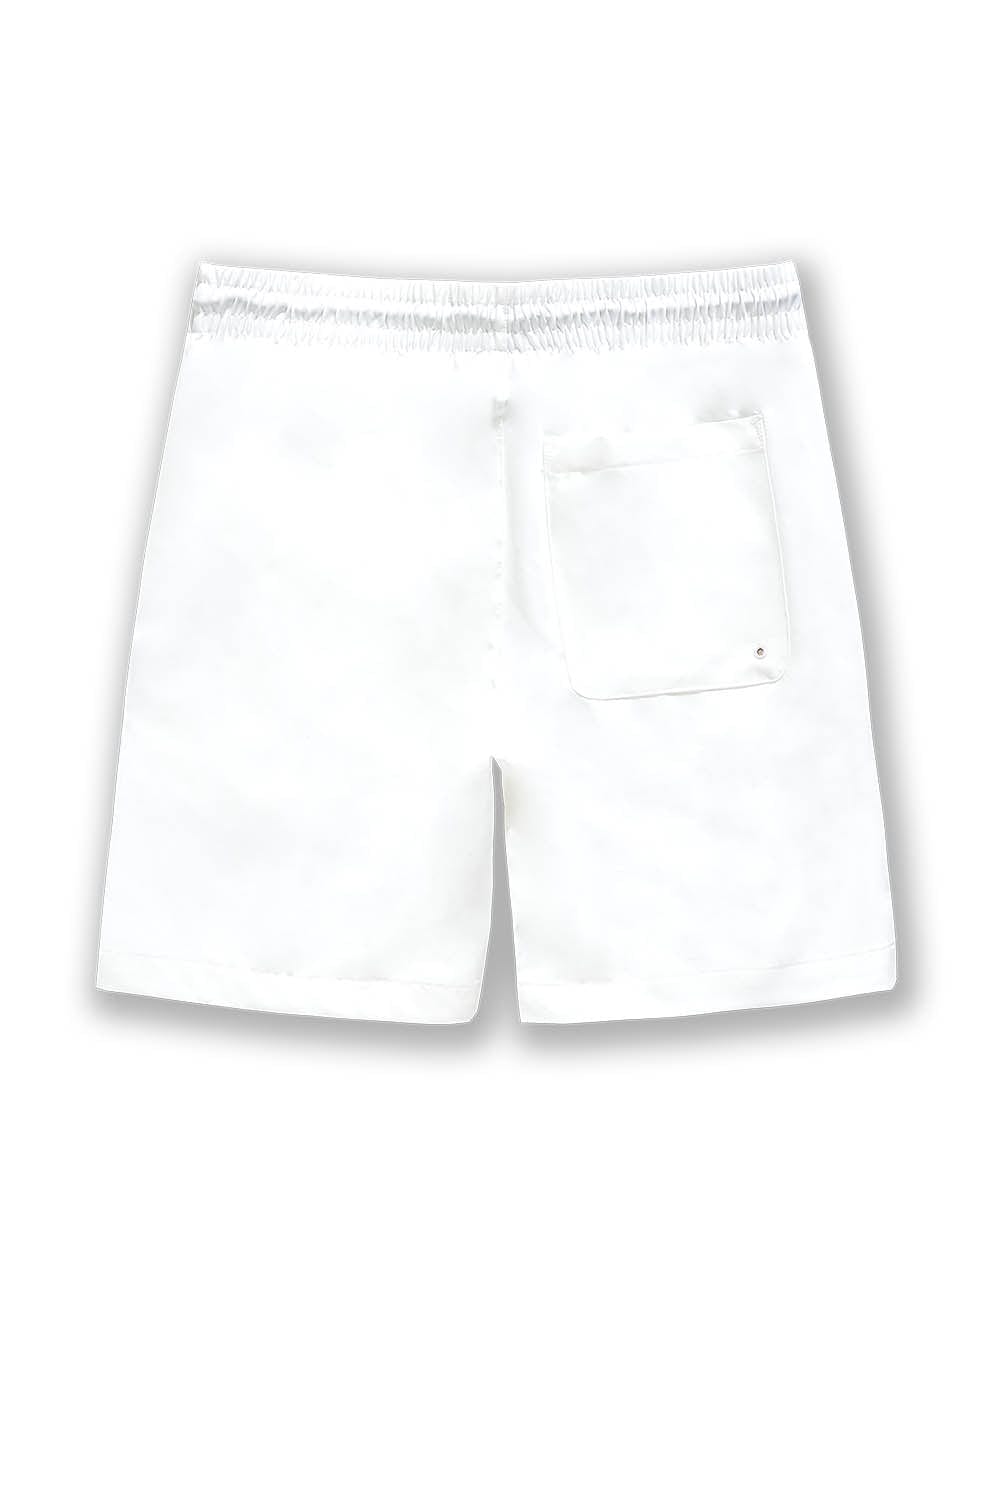 BB Retro - El Paso Shorts (White)